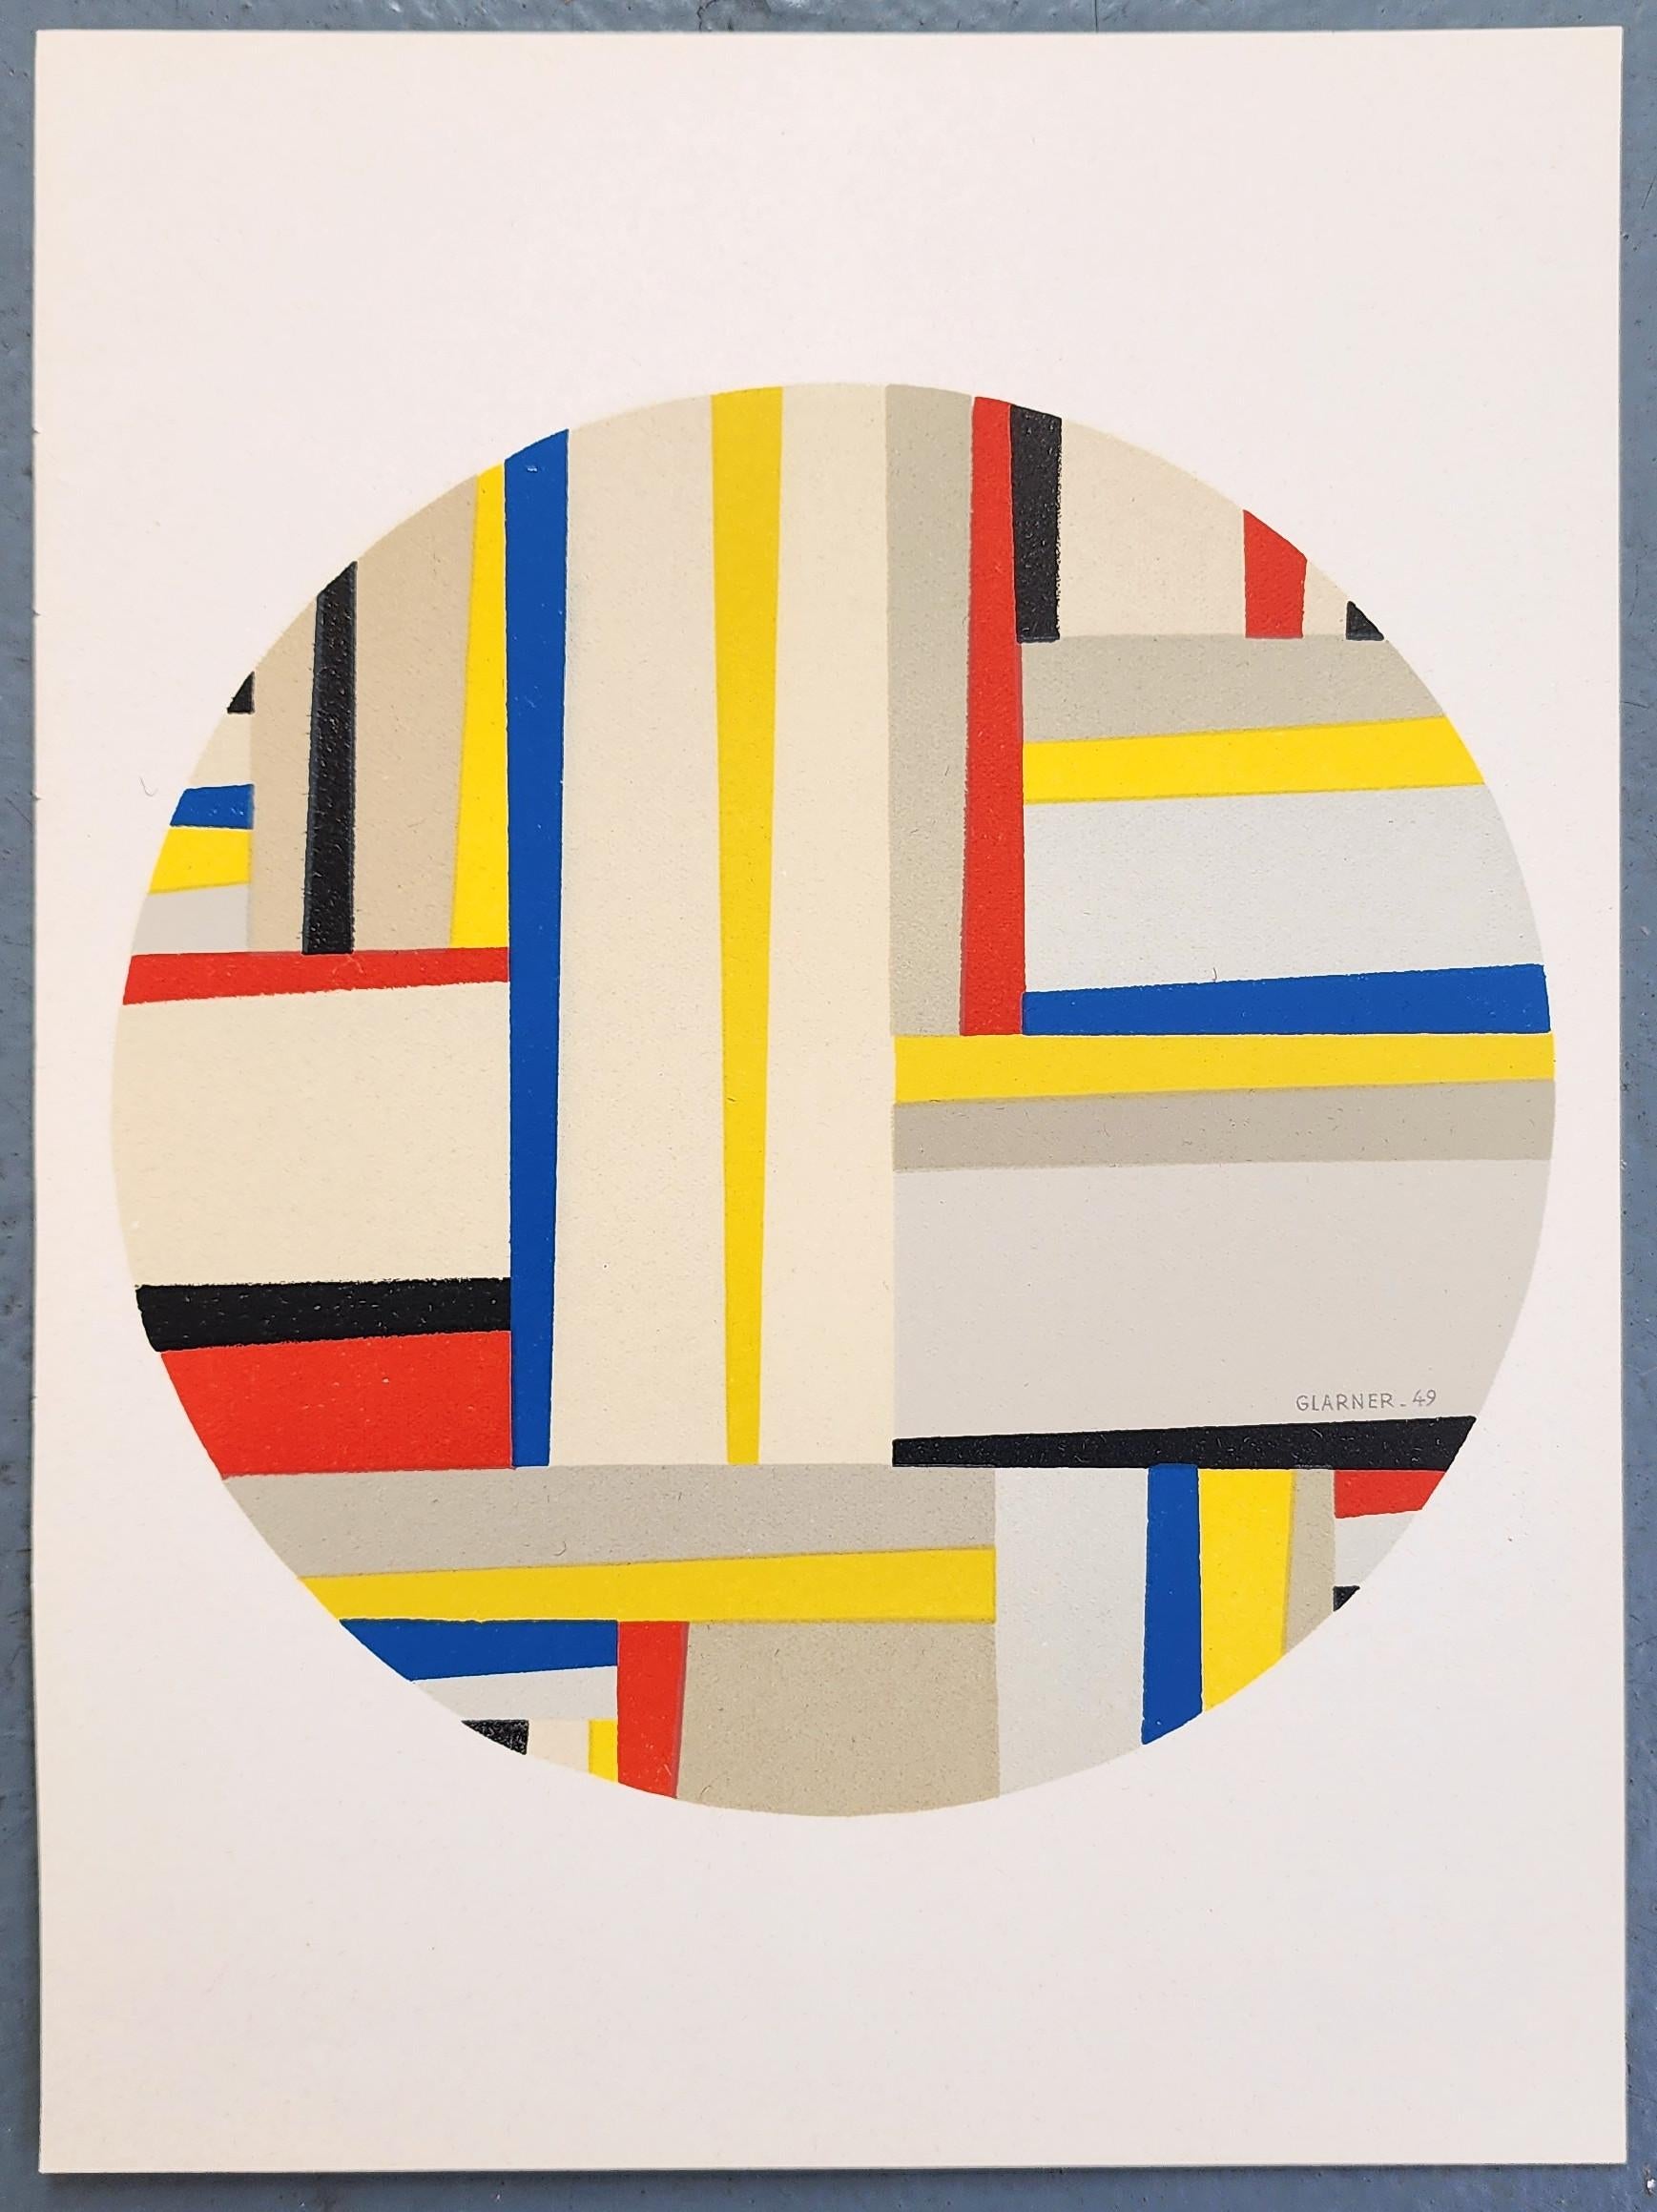 Fritz Glarner Abstract Print - Tondo (Mourlot, Paris, Print, Design, Modern, ~30% OFF LIST PRICE, LIMITED TIME)